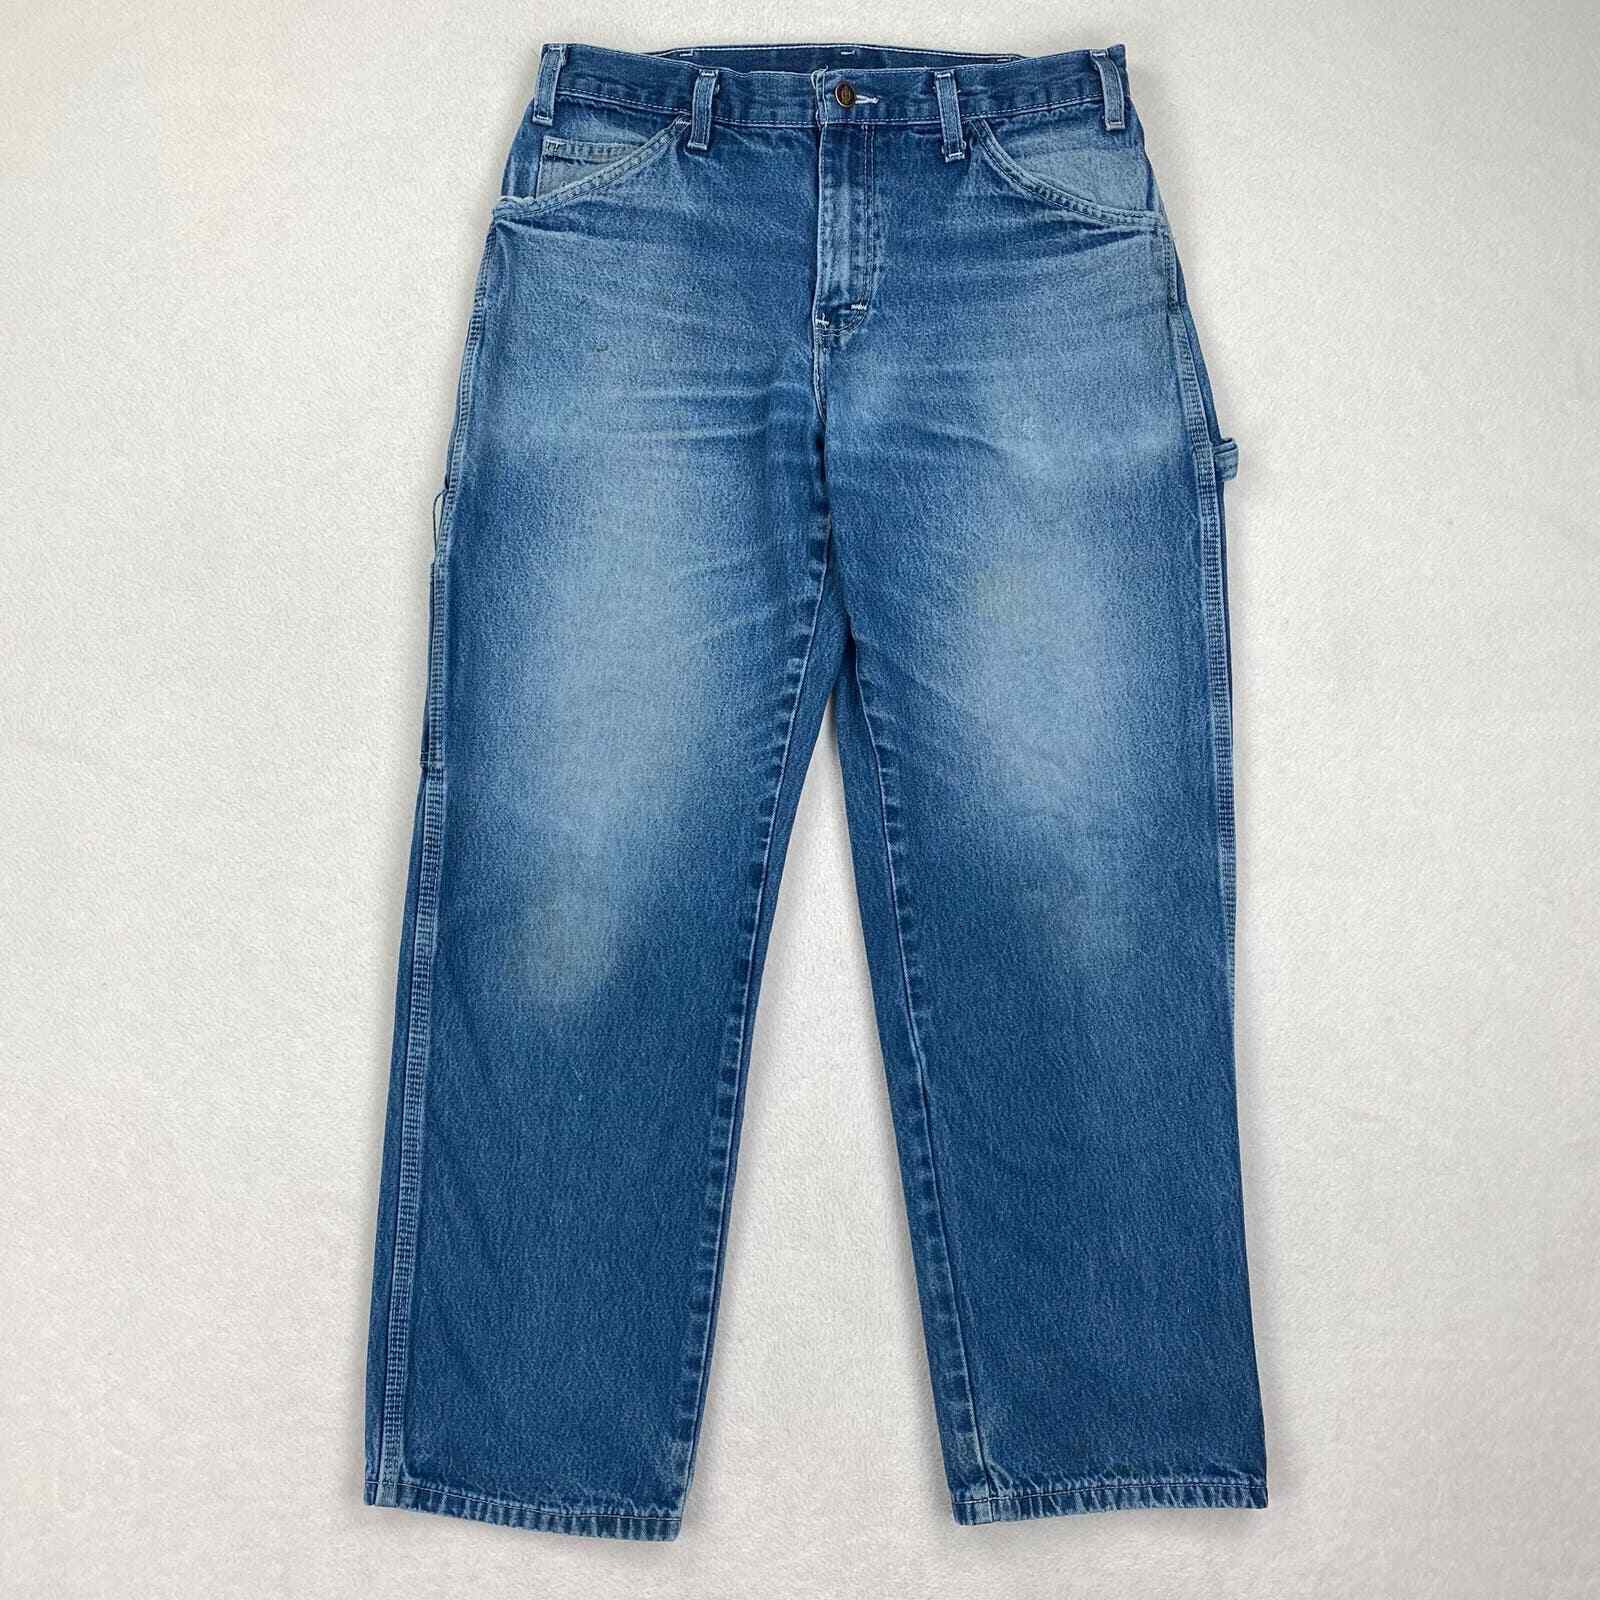 Vintage Dickies Jeans Size 32x29 Medium Wash Fade… - image 1